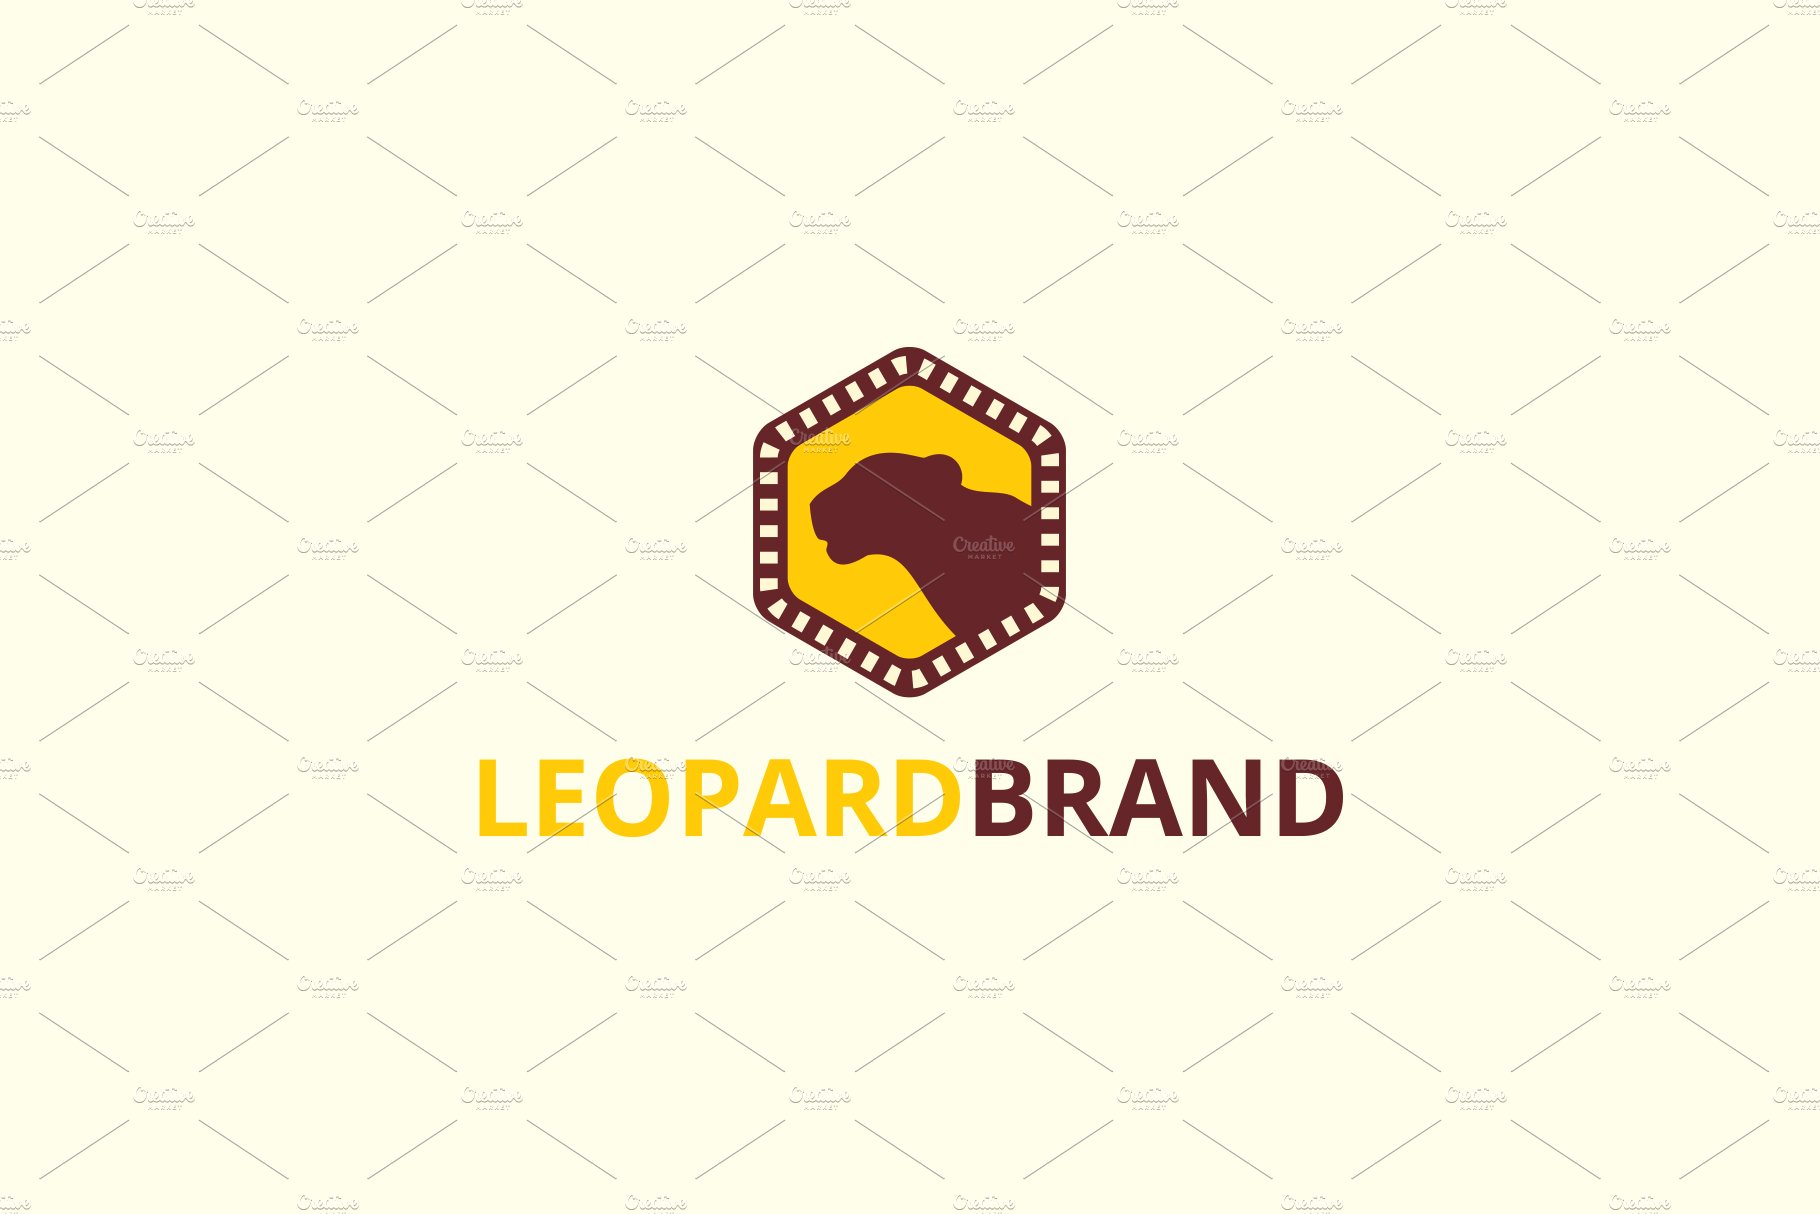 Leopard Brand Logo cover image.